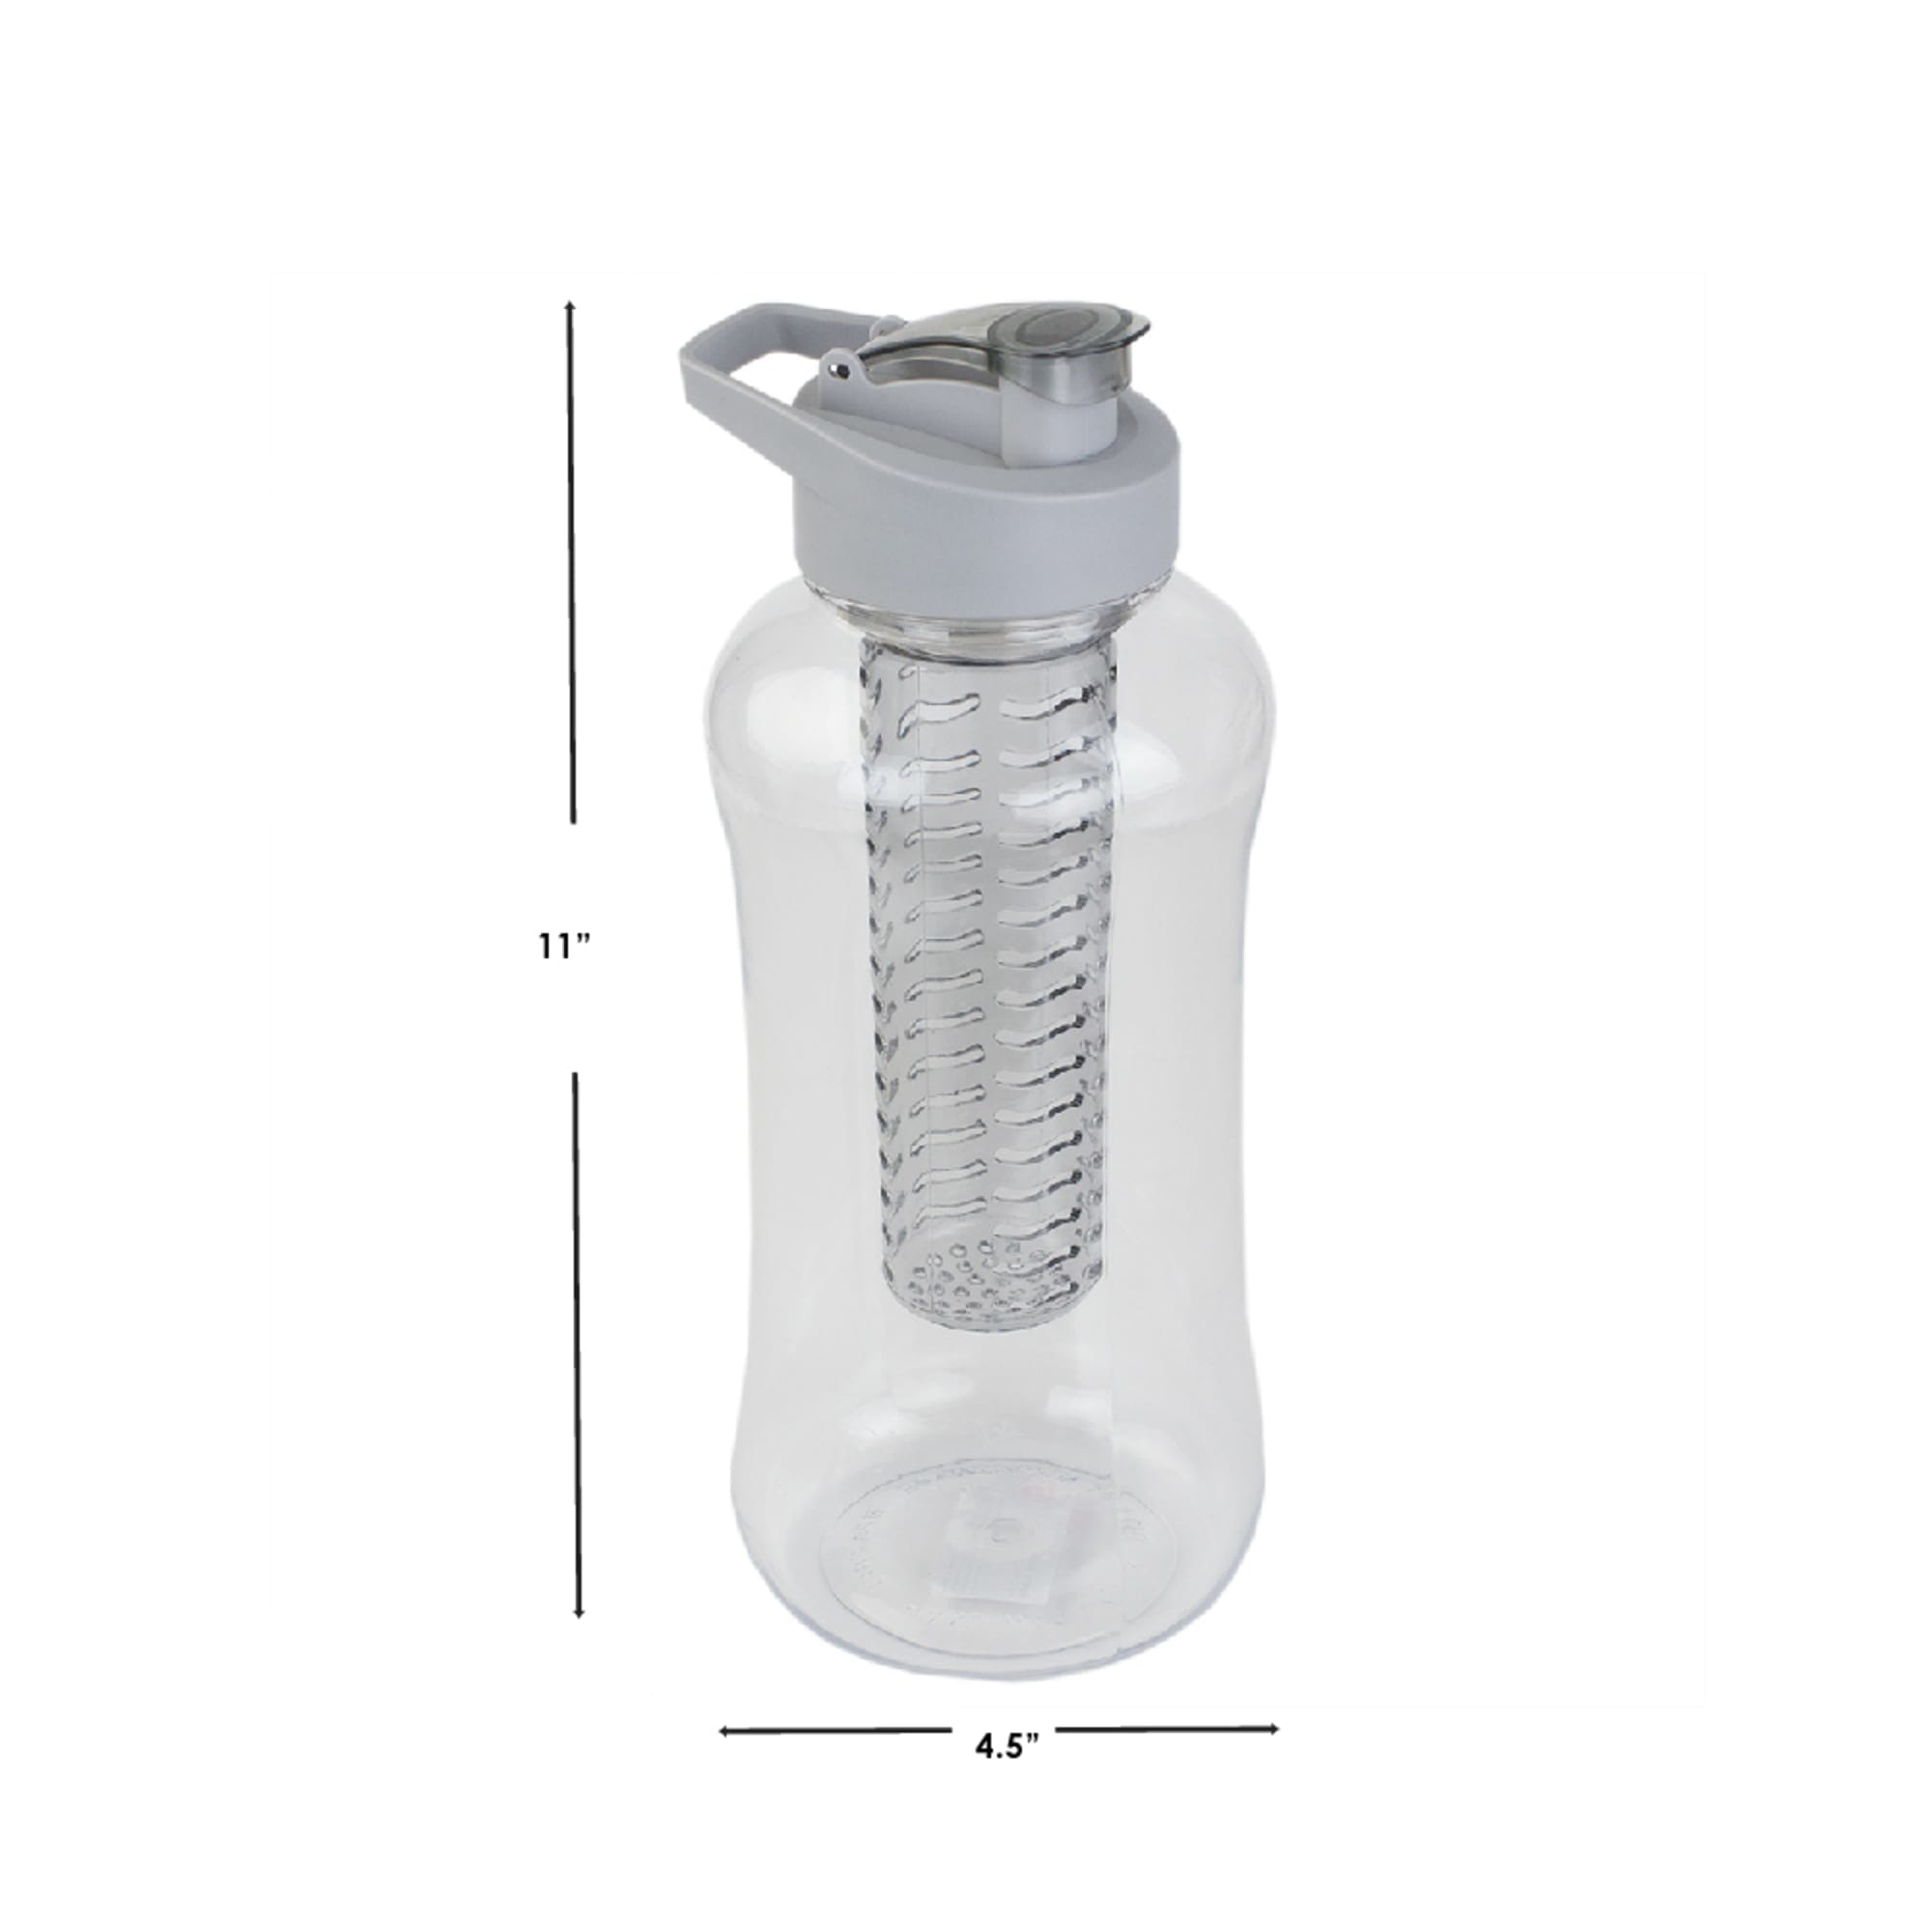 Home Basics 60 oz. Plastic Infuser Travel Bottle, Grey $5.00 EACH, CASE PACK OF 12